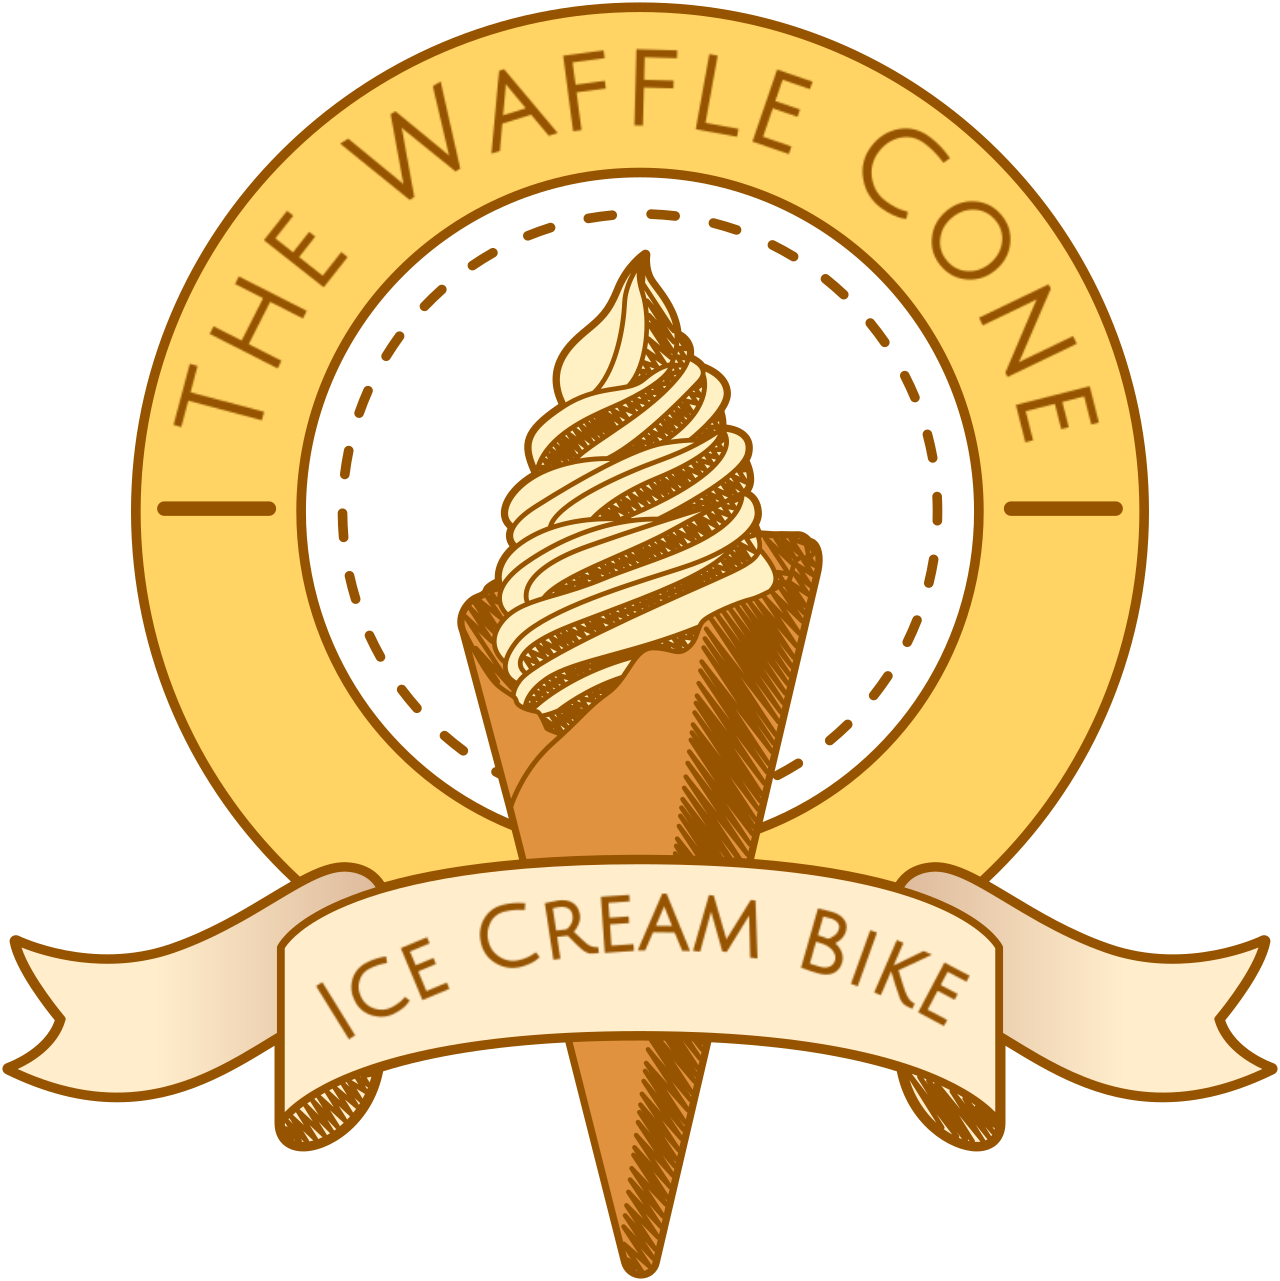 The Waffle Cone's logo